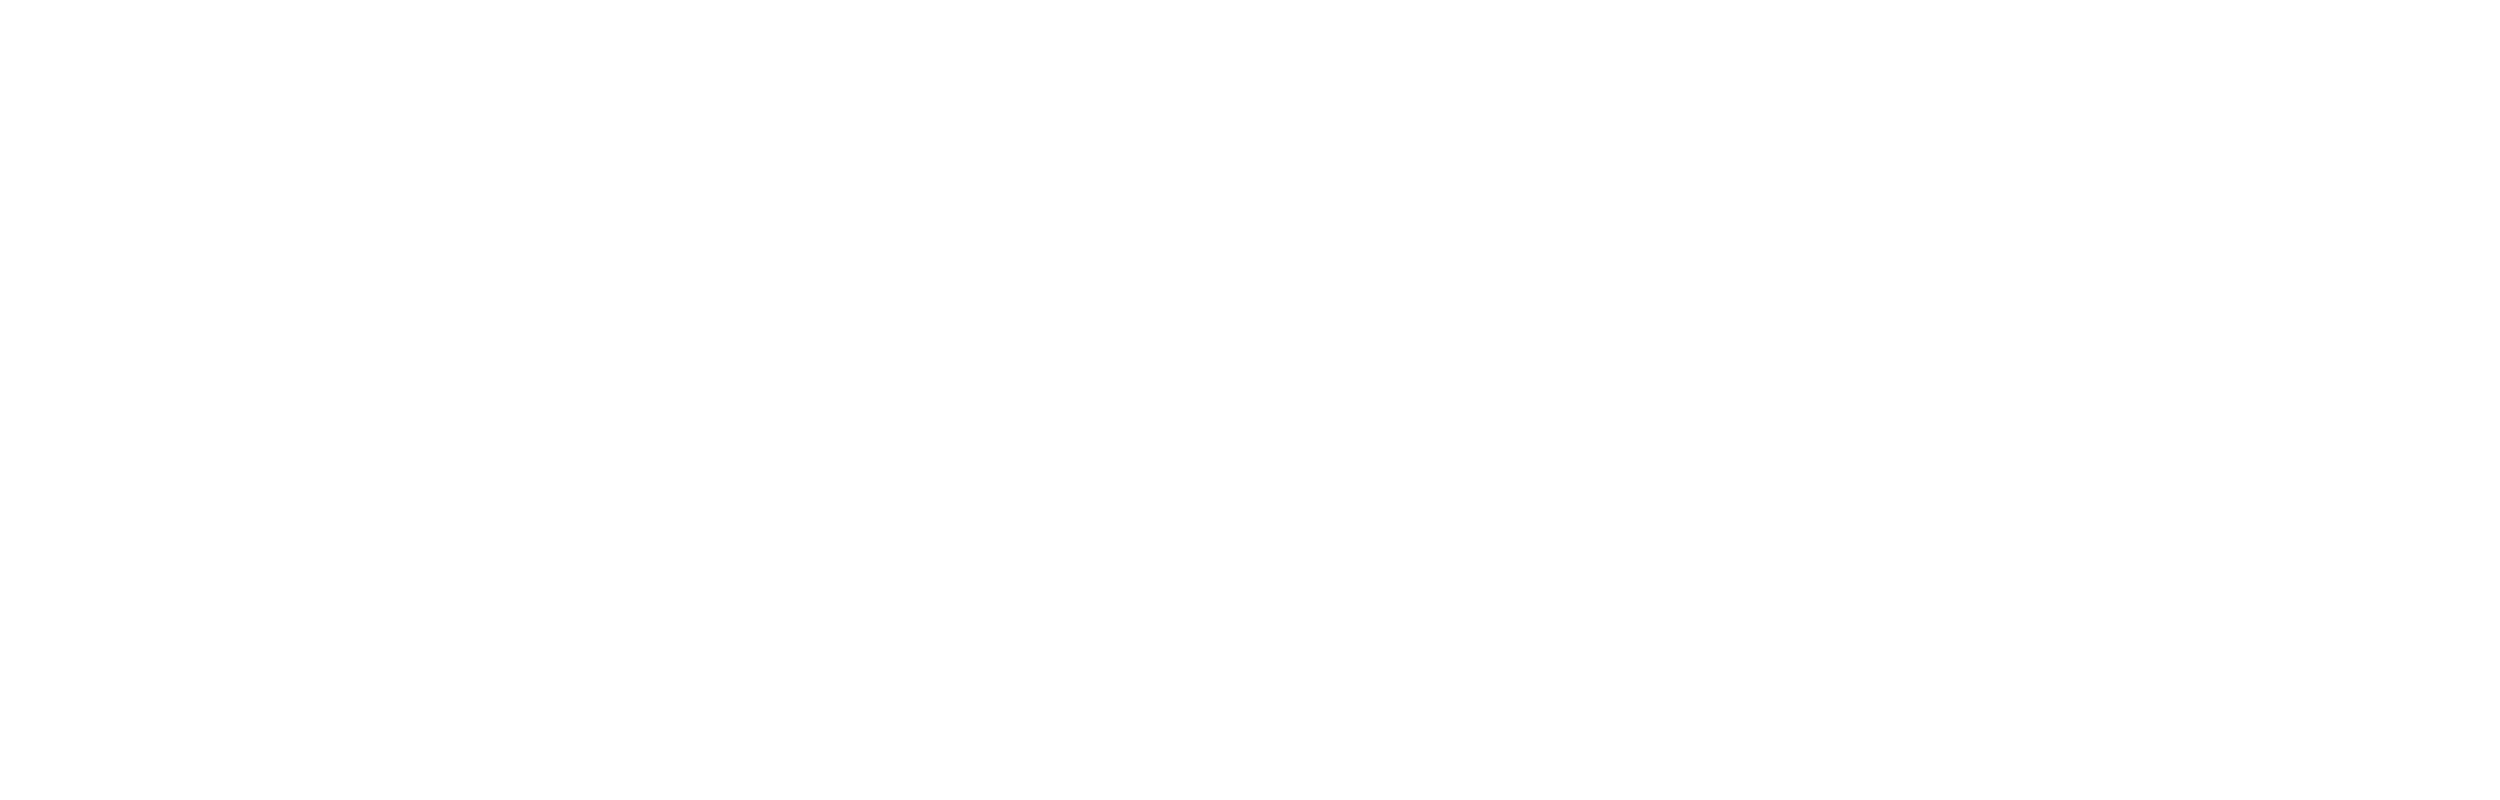 Solagenica (2500 × 1000 px) (2)